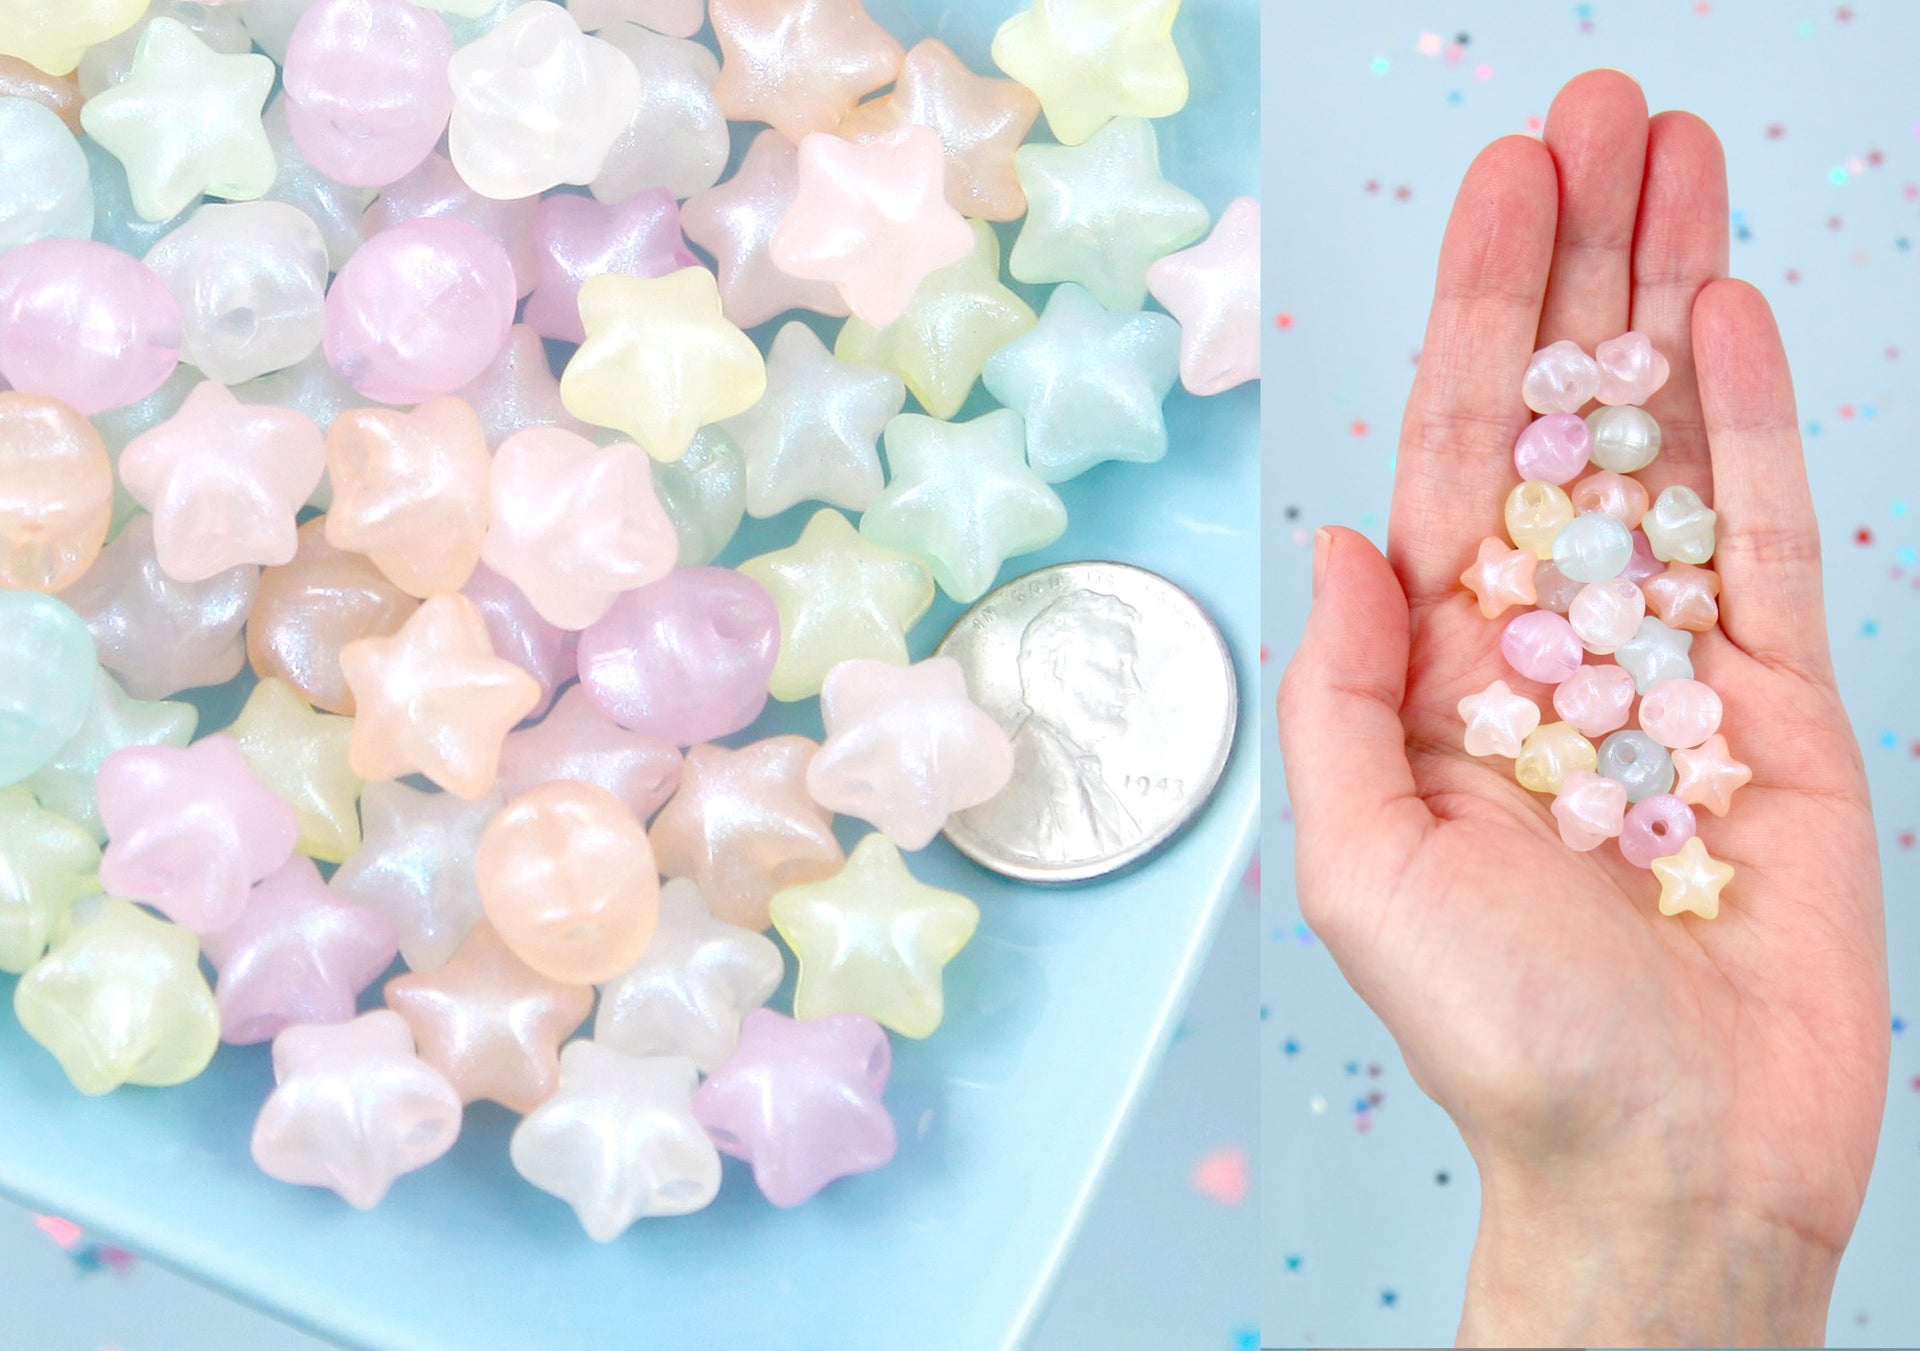 Pastel Star Beads - 10mm Tiny Plastic Pastel Star Beads - 275 pc set –  Delish Beads